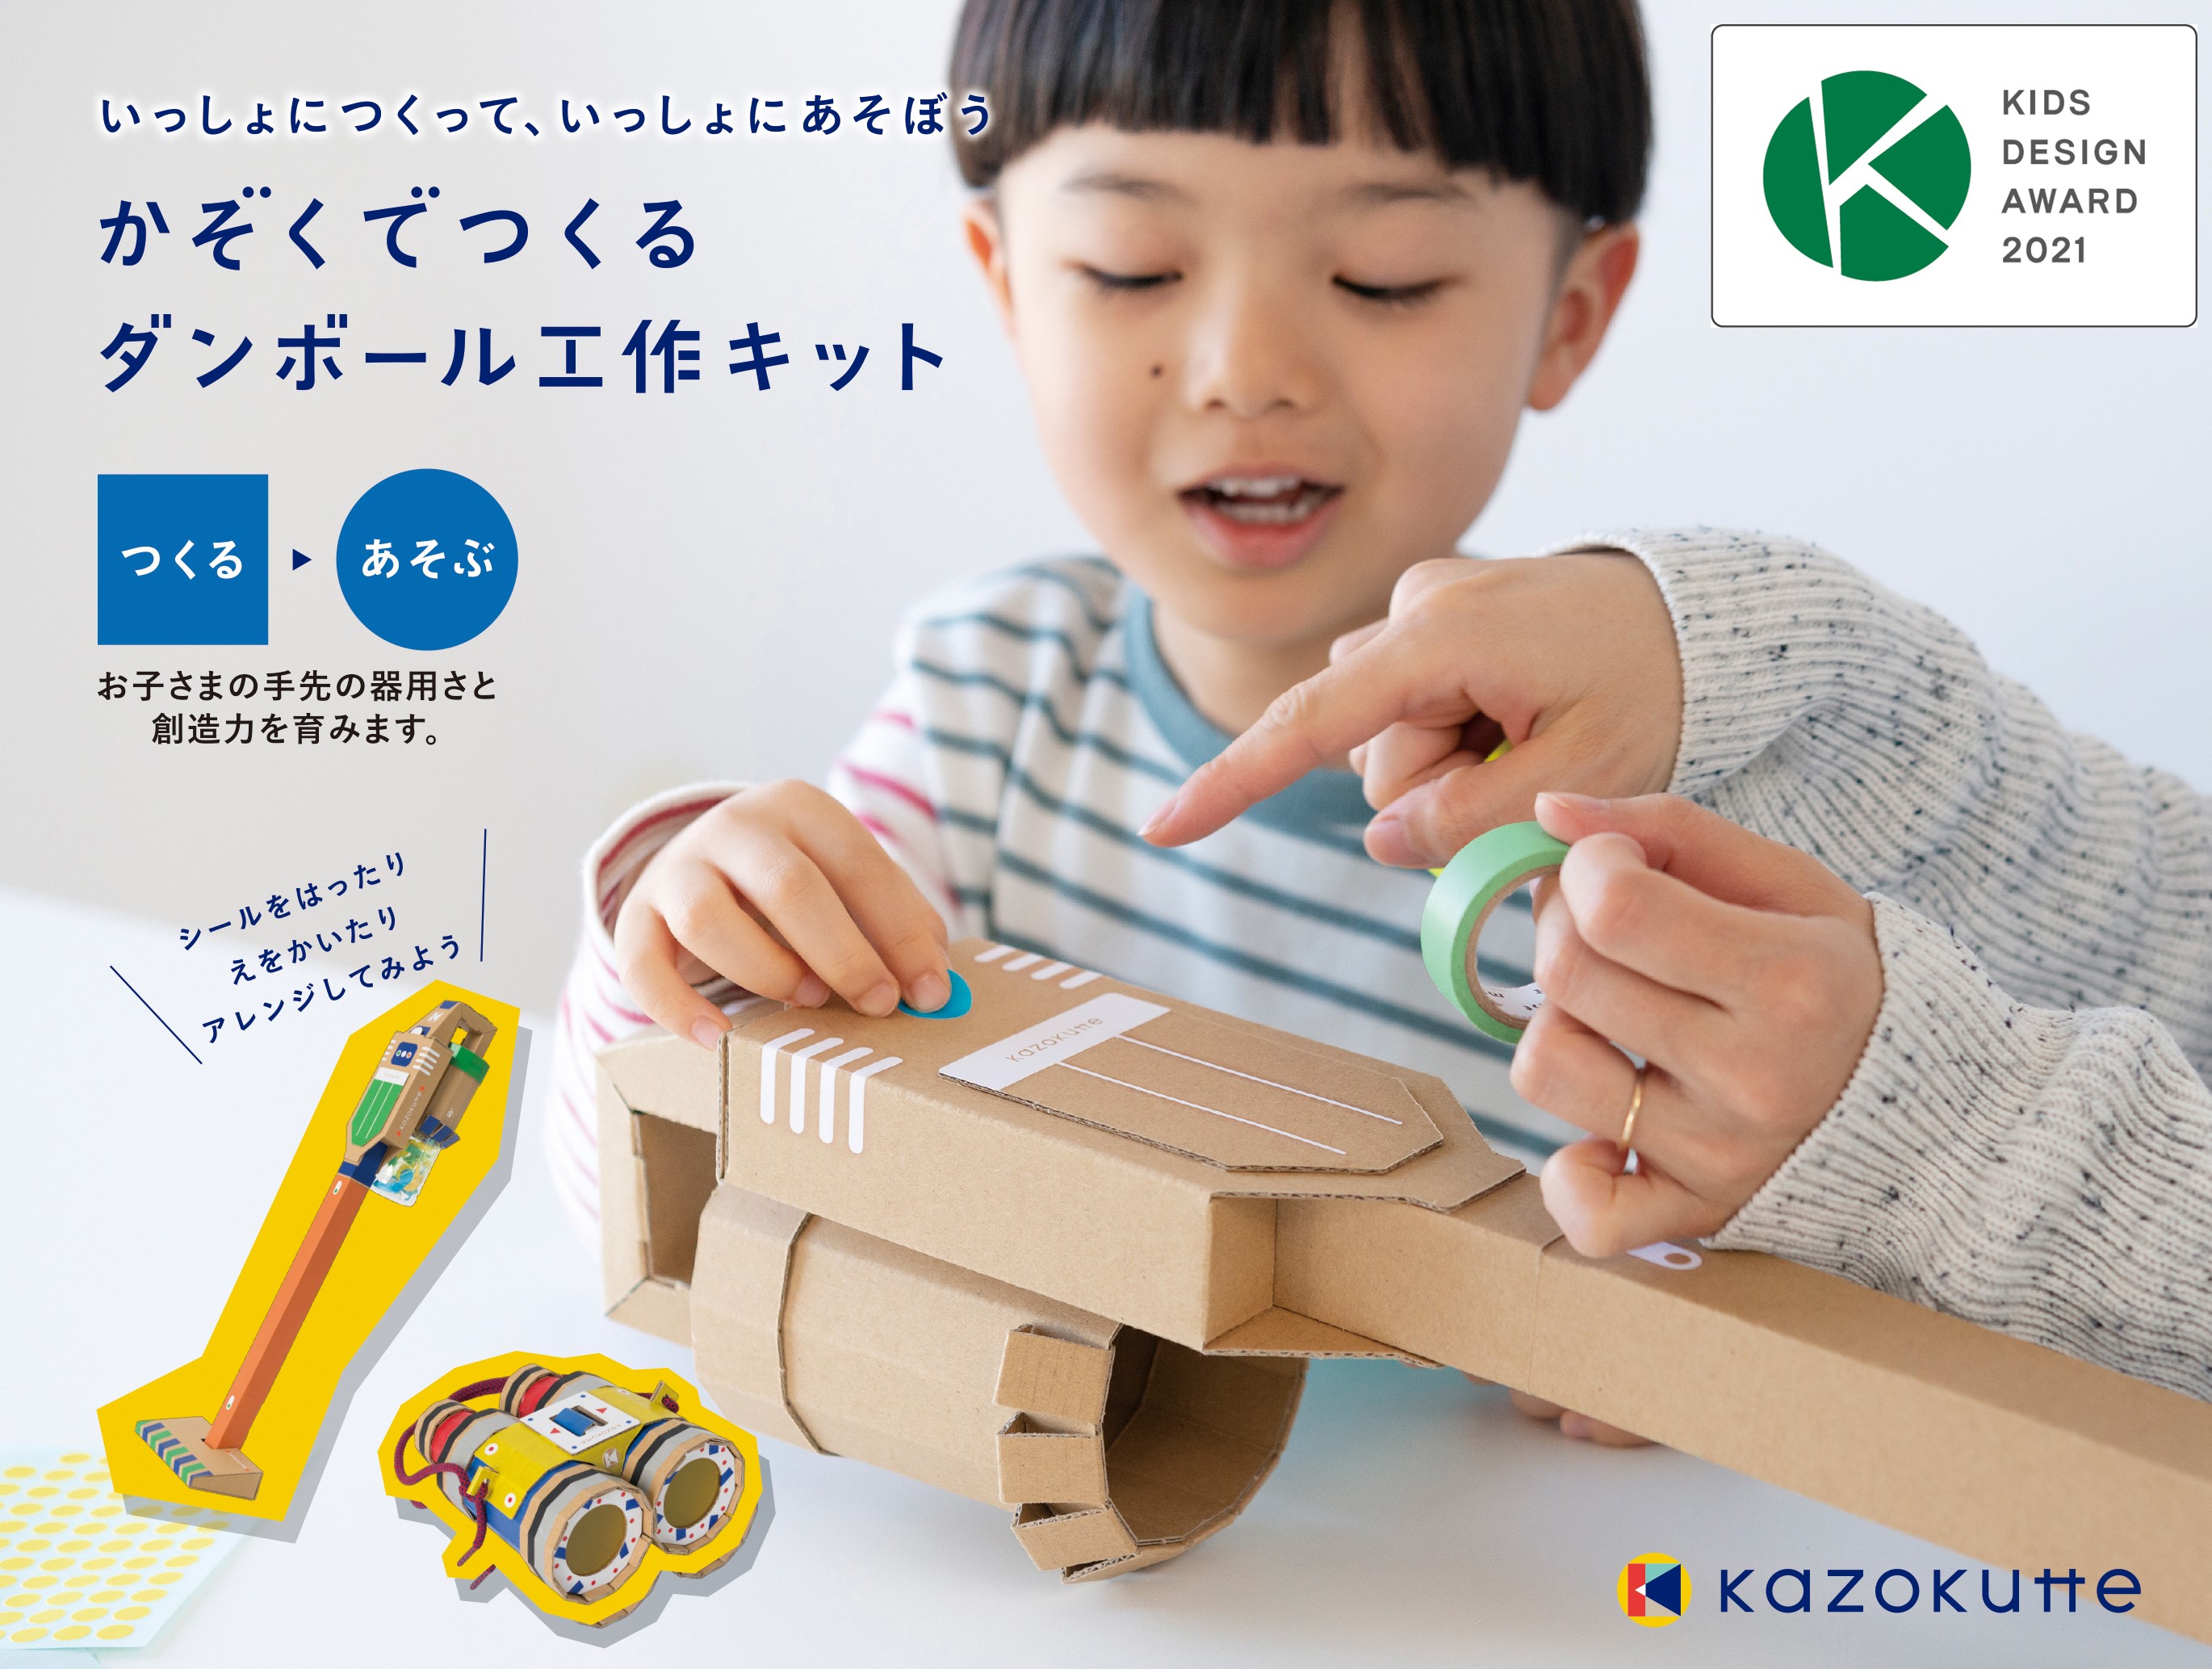 Kazokutteの ダンボール工作キット が第15回キッズデザイン賞を受賞しました 株式会社 学研ホールディングスのプレスリリース